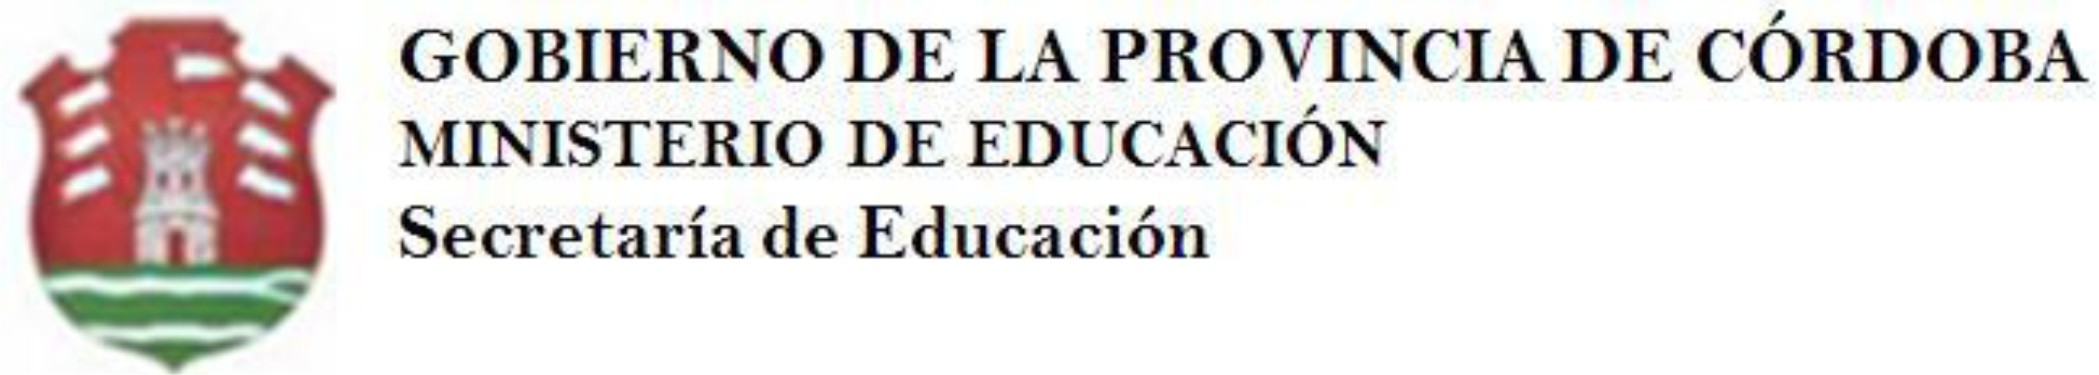 Logo Ministrerio de Educación, Secretaria de Educación